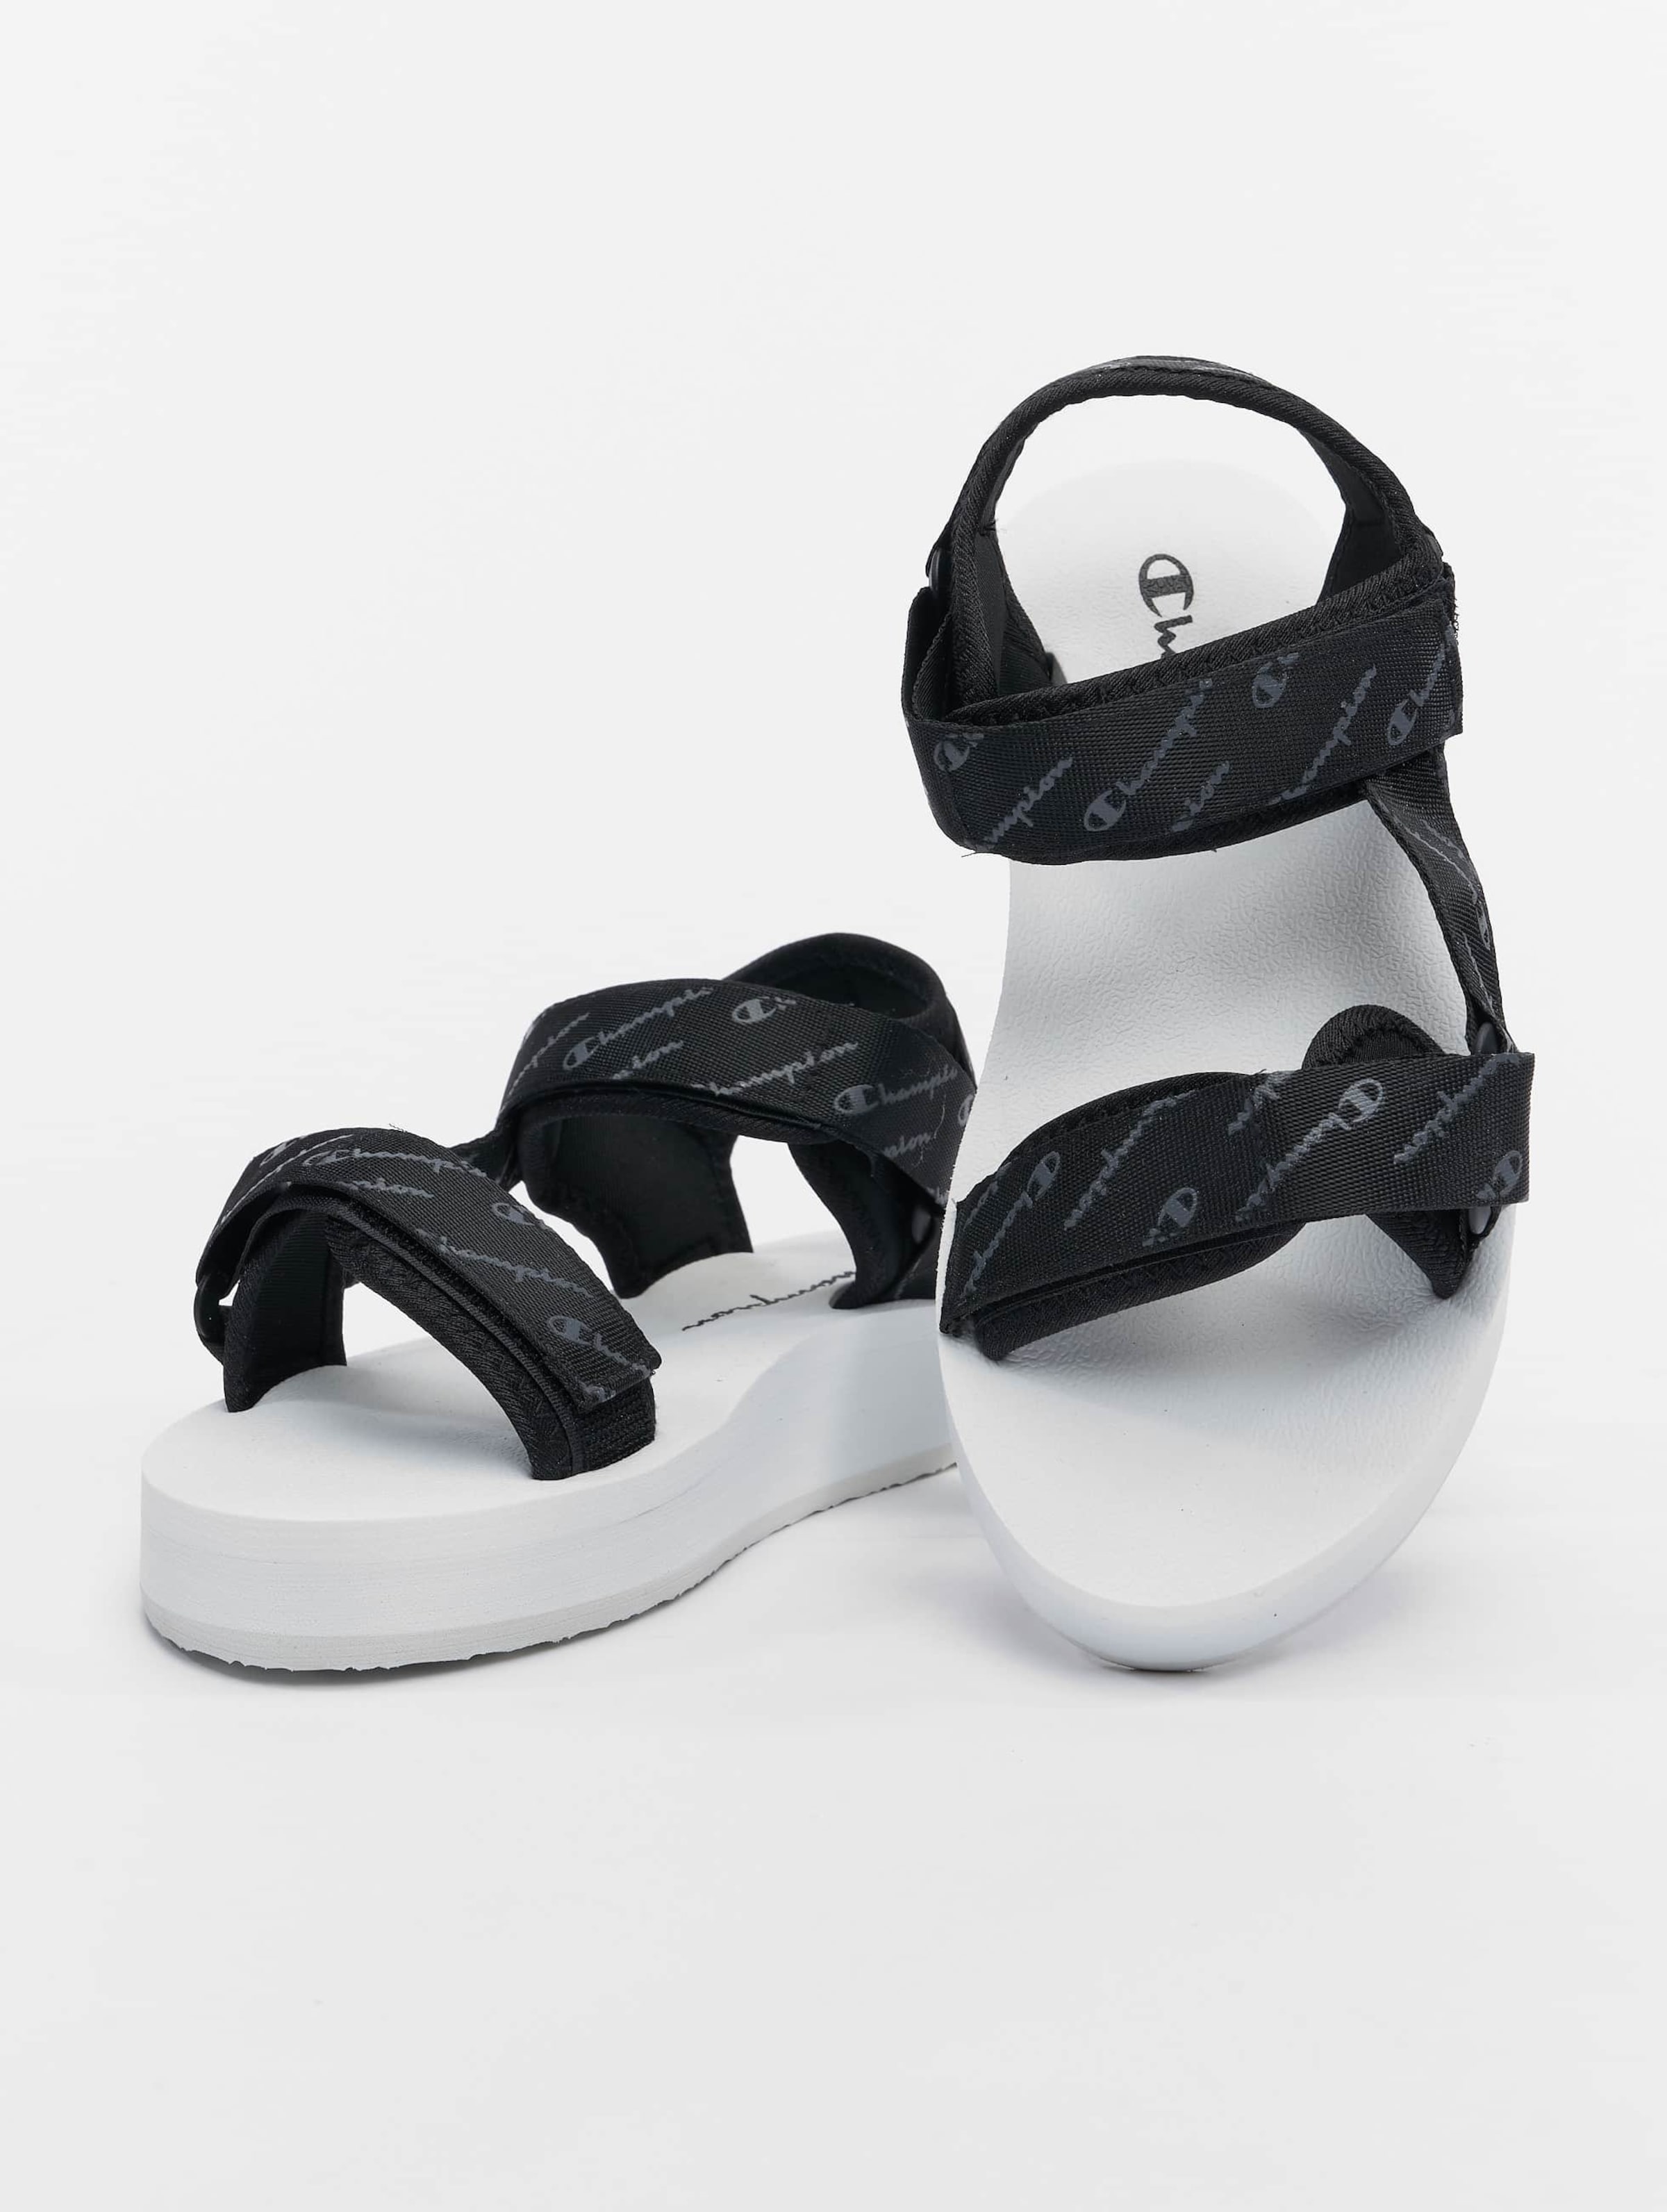 c9 by champion Black Sandals for Men | Mercari